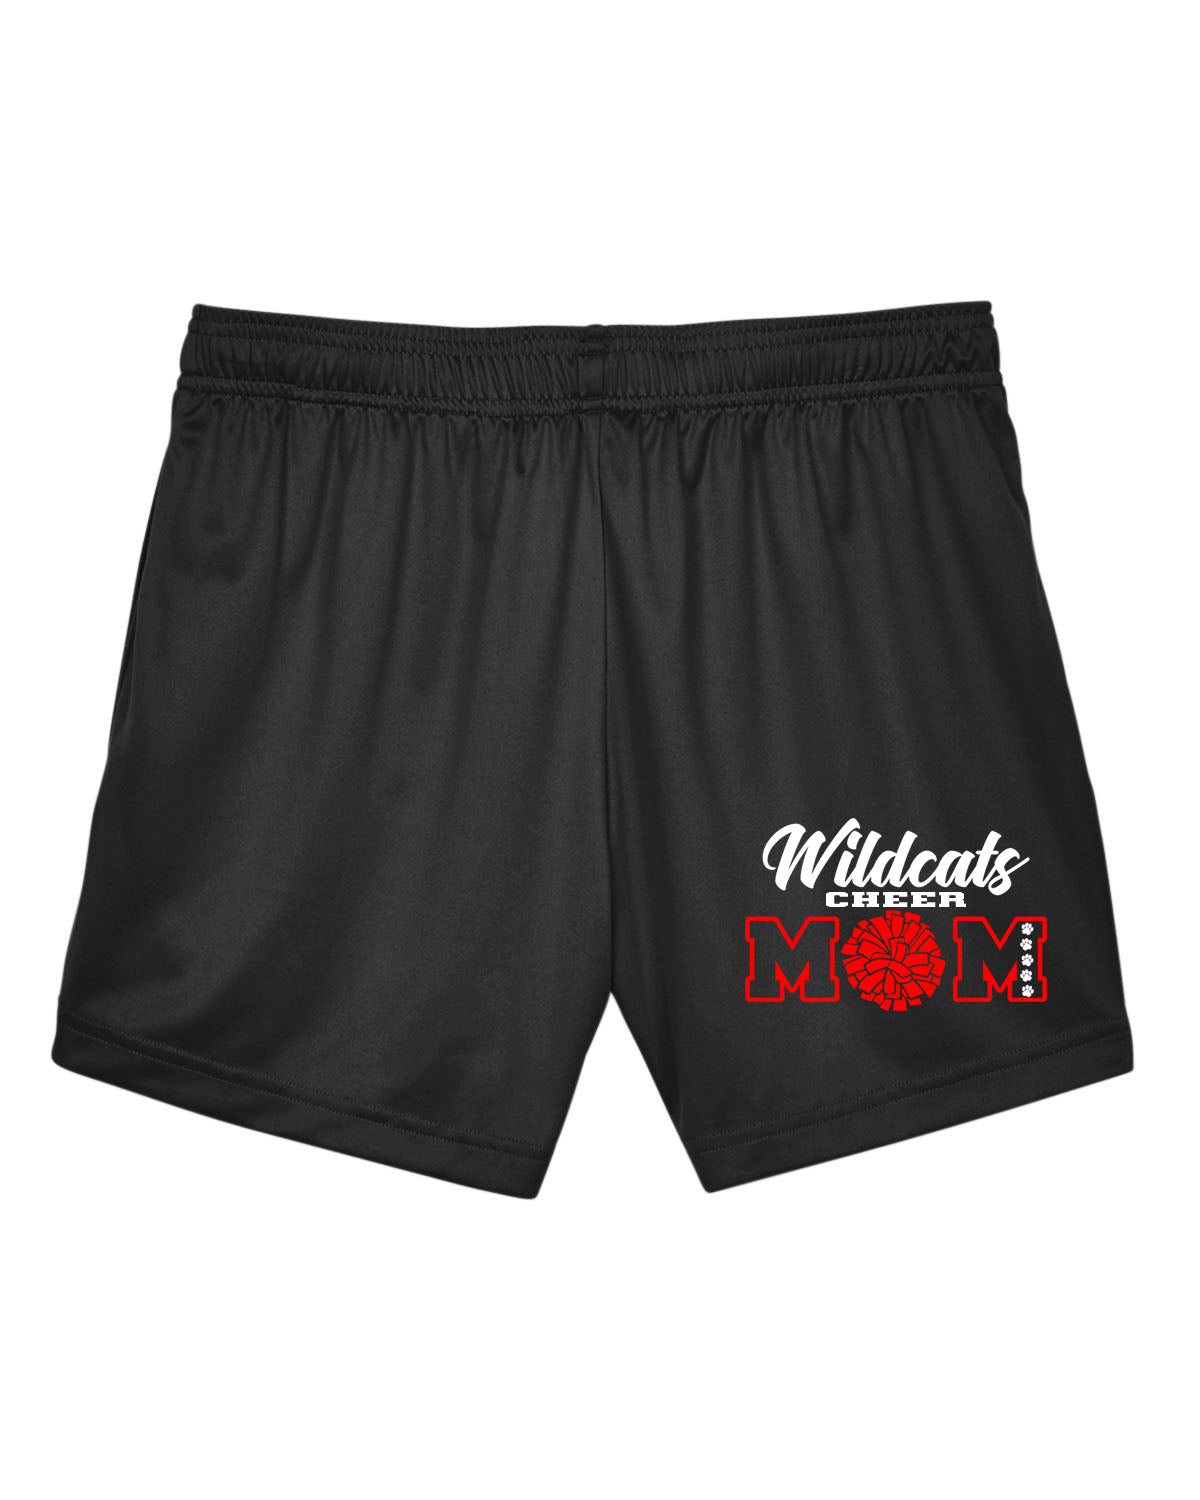 Wildcats Cheer Ladies Performance Design 7 Shorts